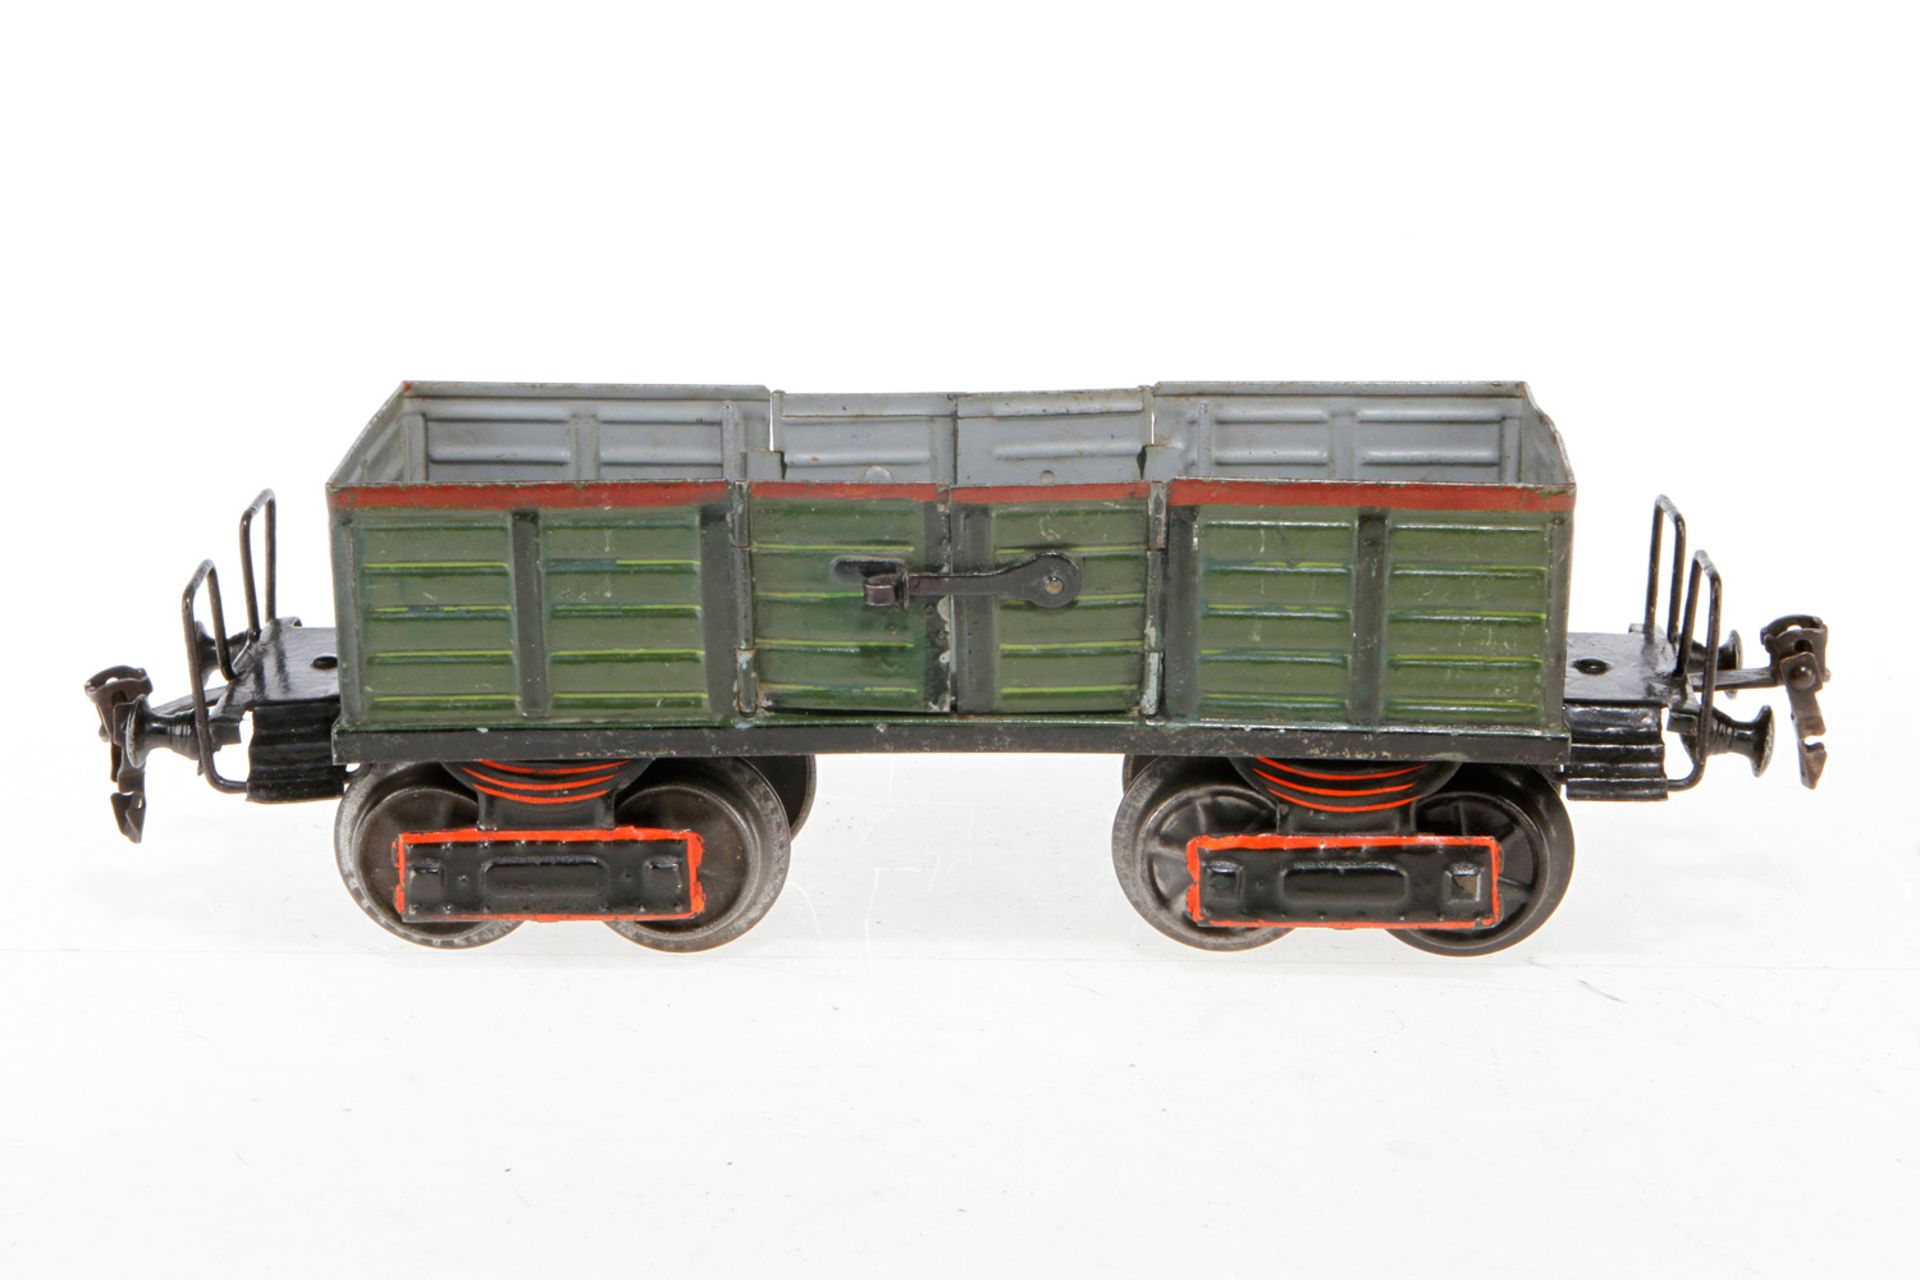 Märklin offener Güterwagen 1845, S 1, uralt, HL, 2x 2 LTH, LS tw ausgebessert, Drehgestellstifte